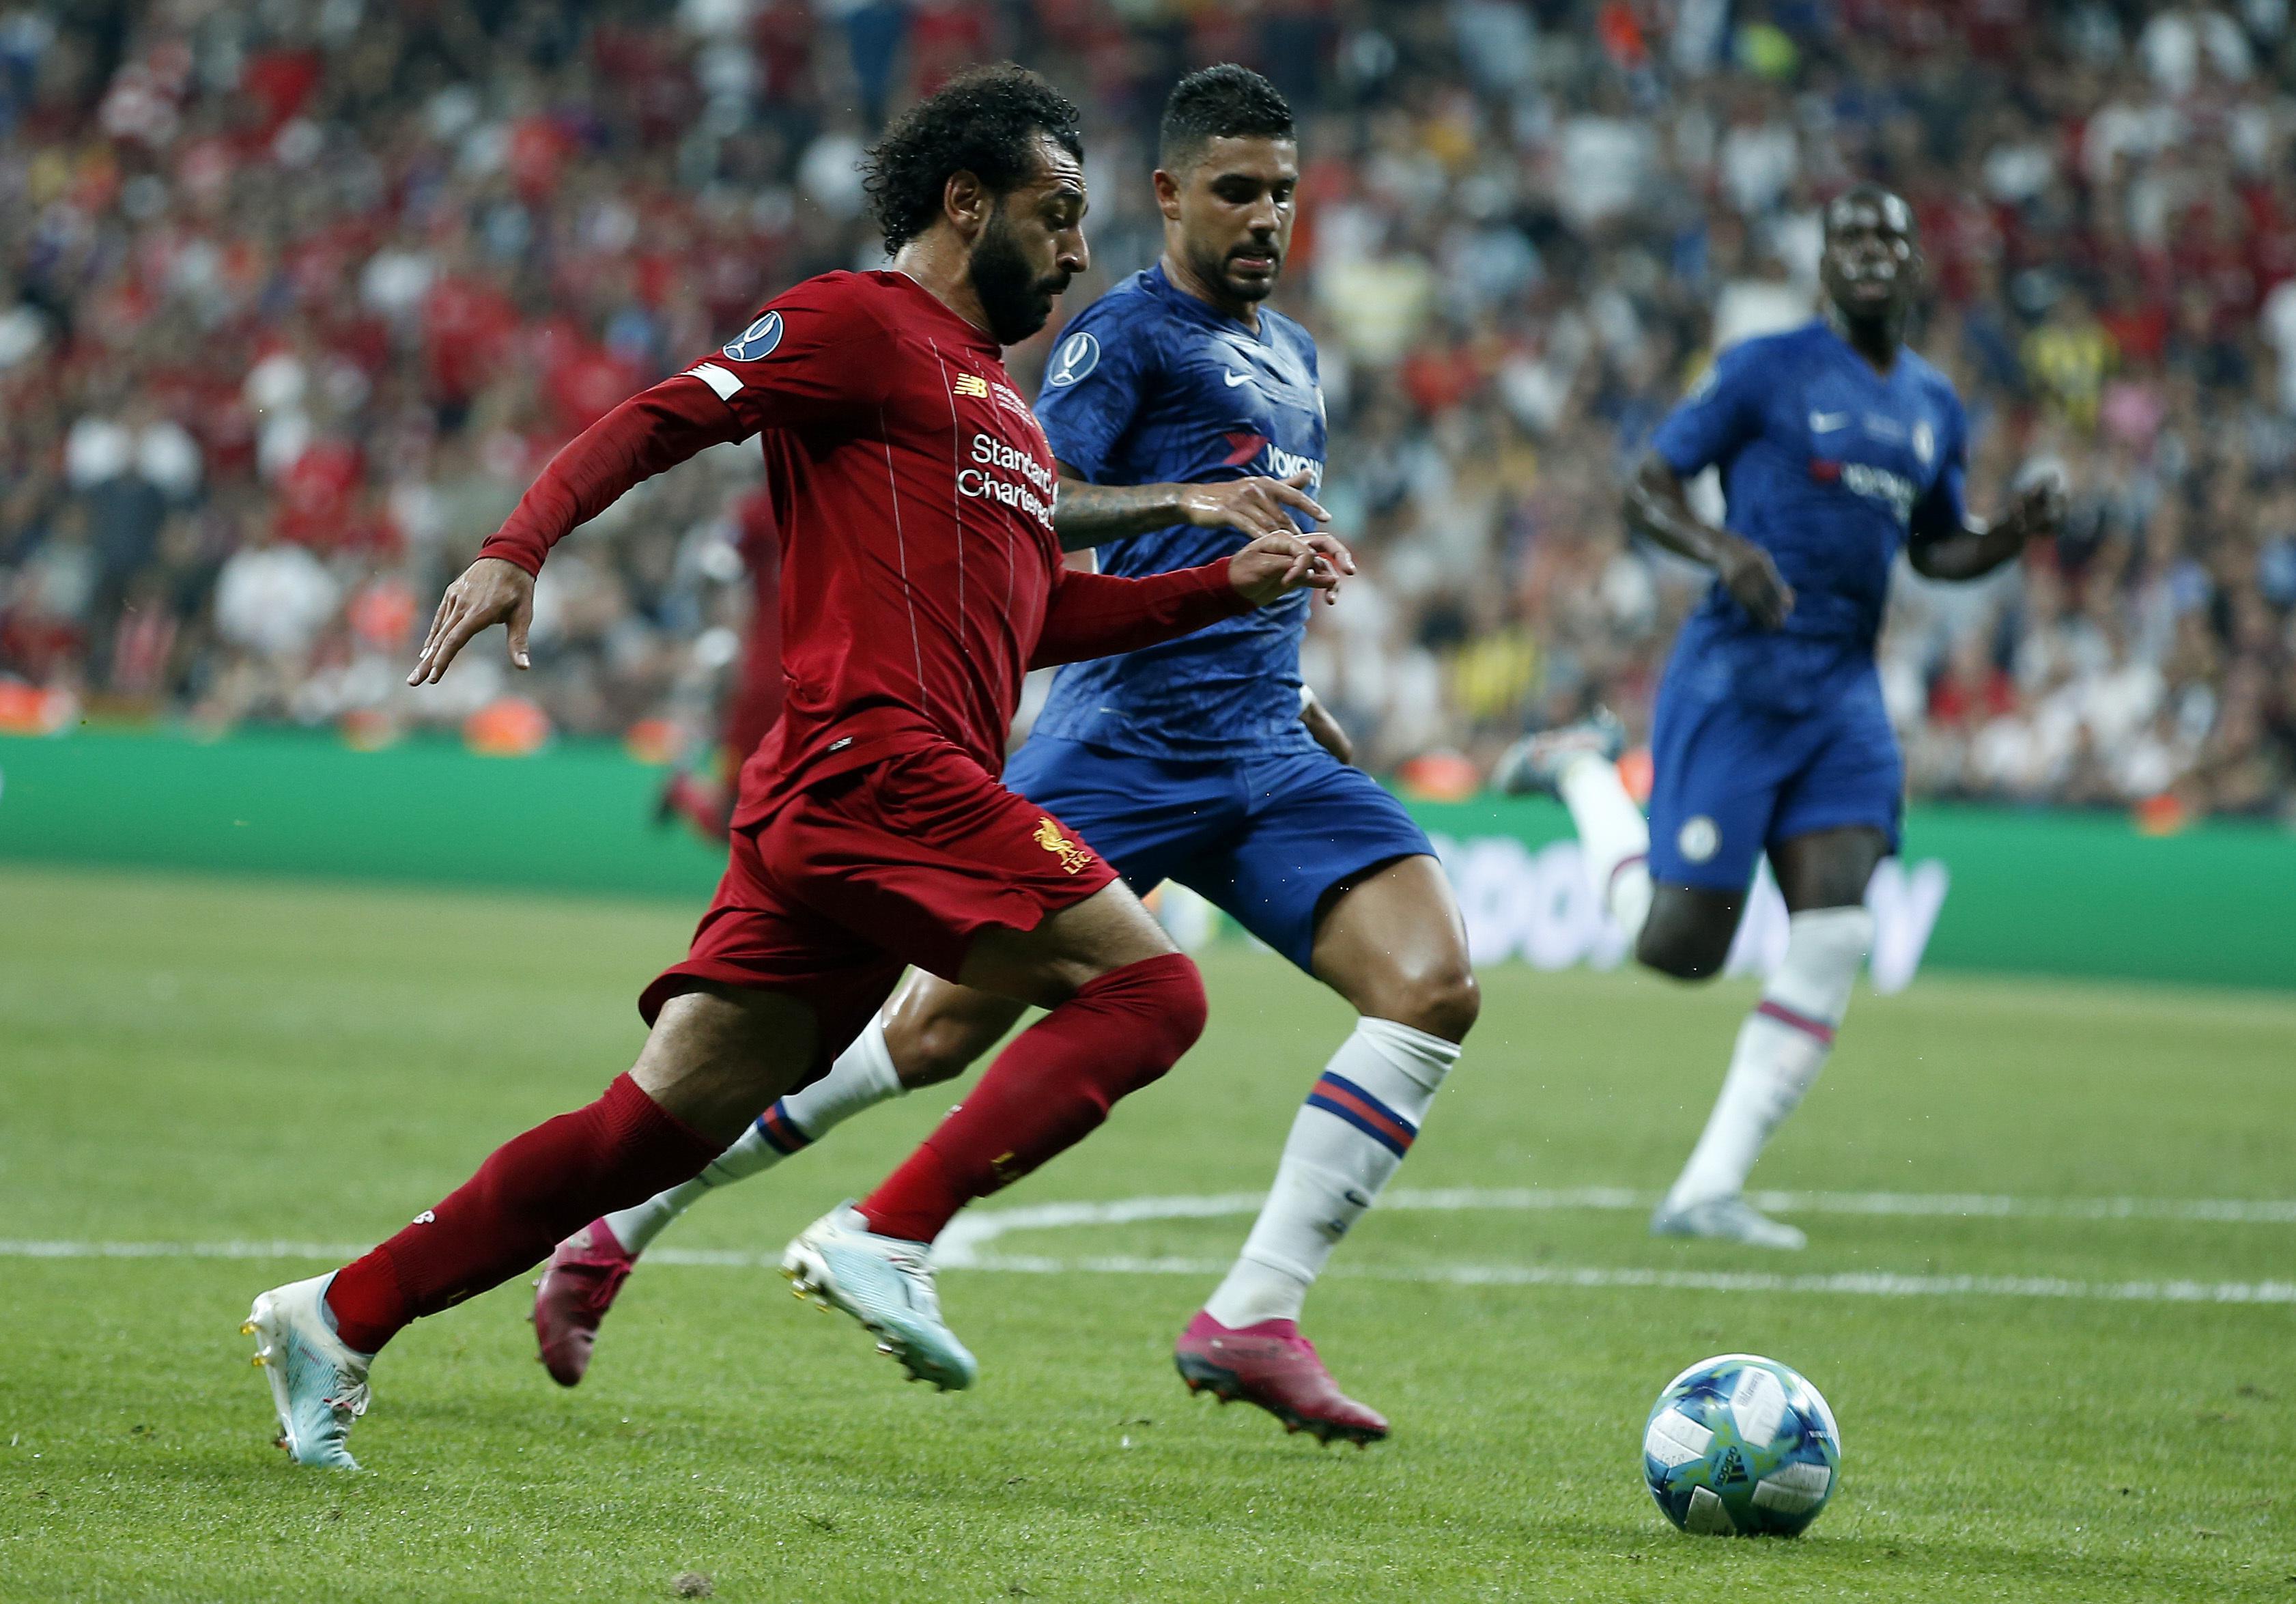 (ÖZET) Liverpool - Chelsea maç sonucu: 2-2 (penaltılar 5-4)